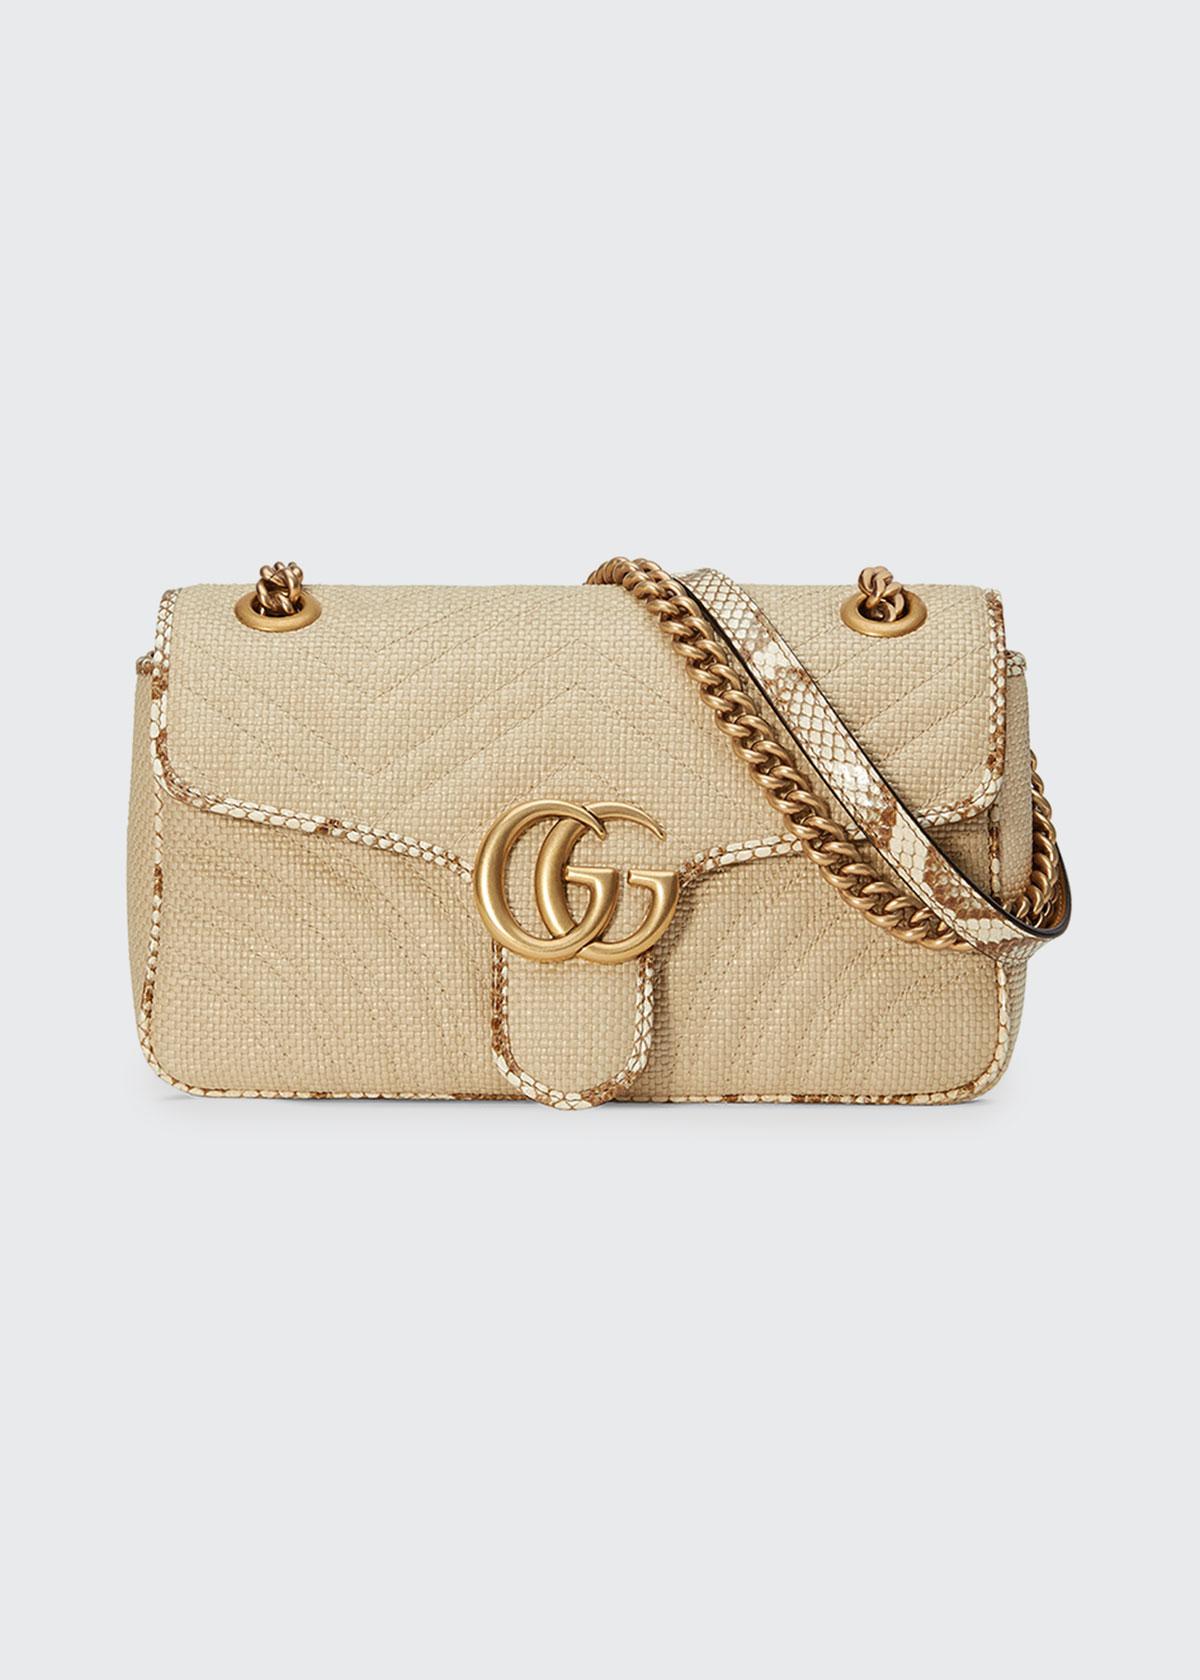 Gucci Raffia GG Marmont Small Shoulder Bag, Multi - Monkee's of Mount  Pleasant